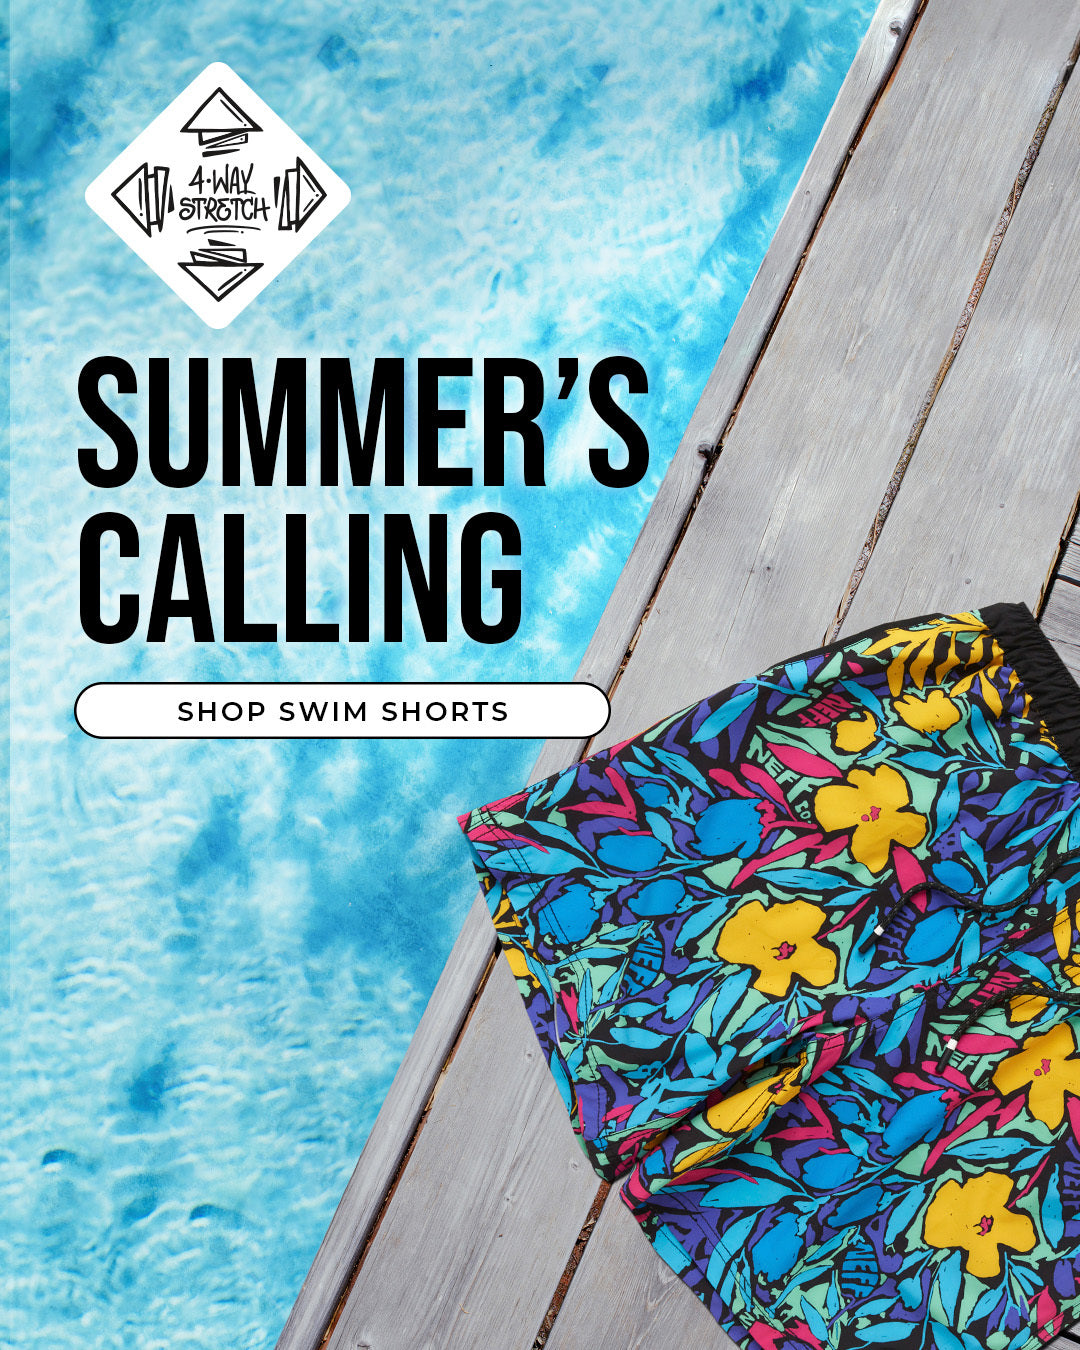 Summer's Calling. Shop Swim Shorts. 4 Way Stretch.